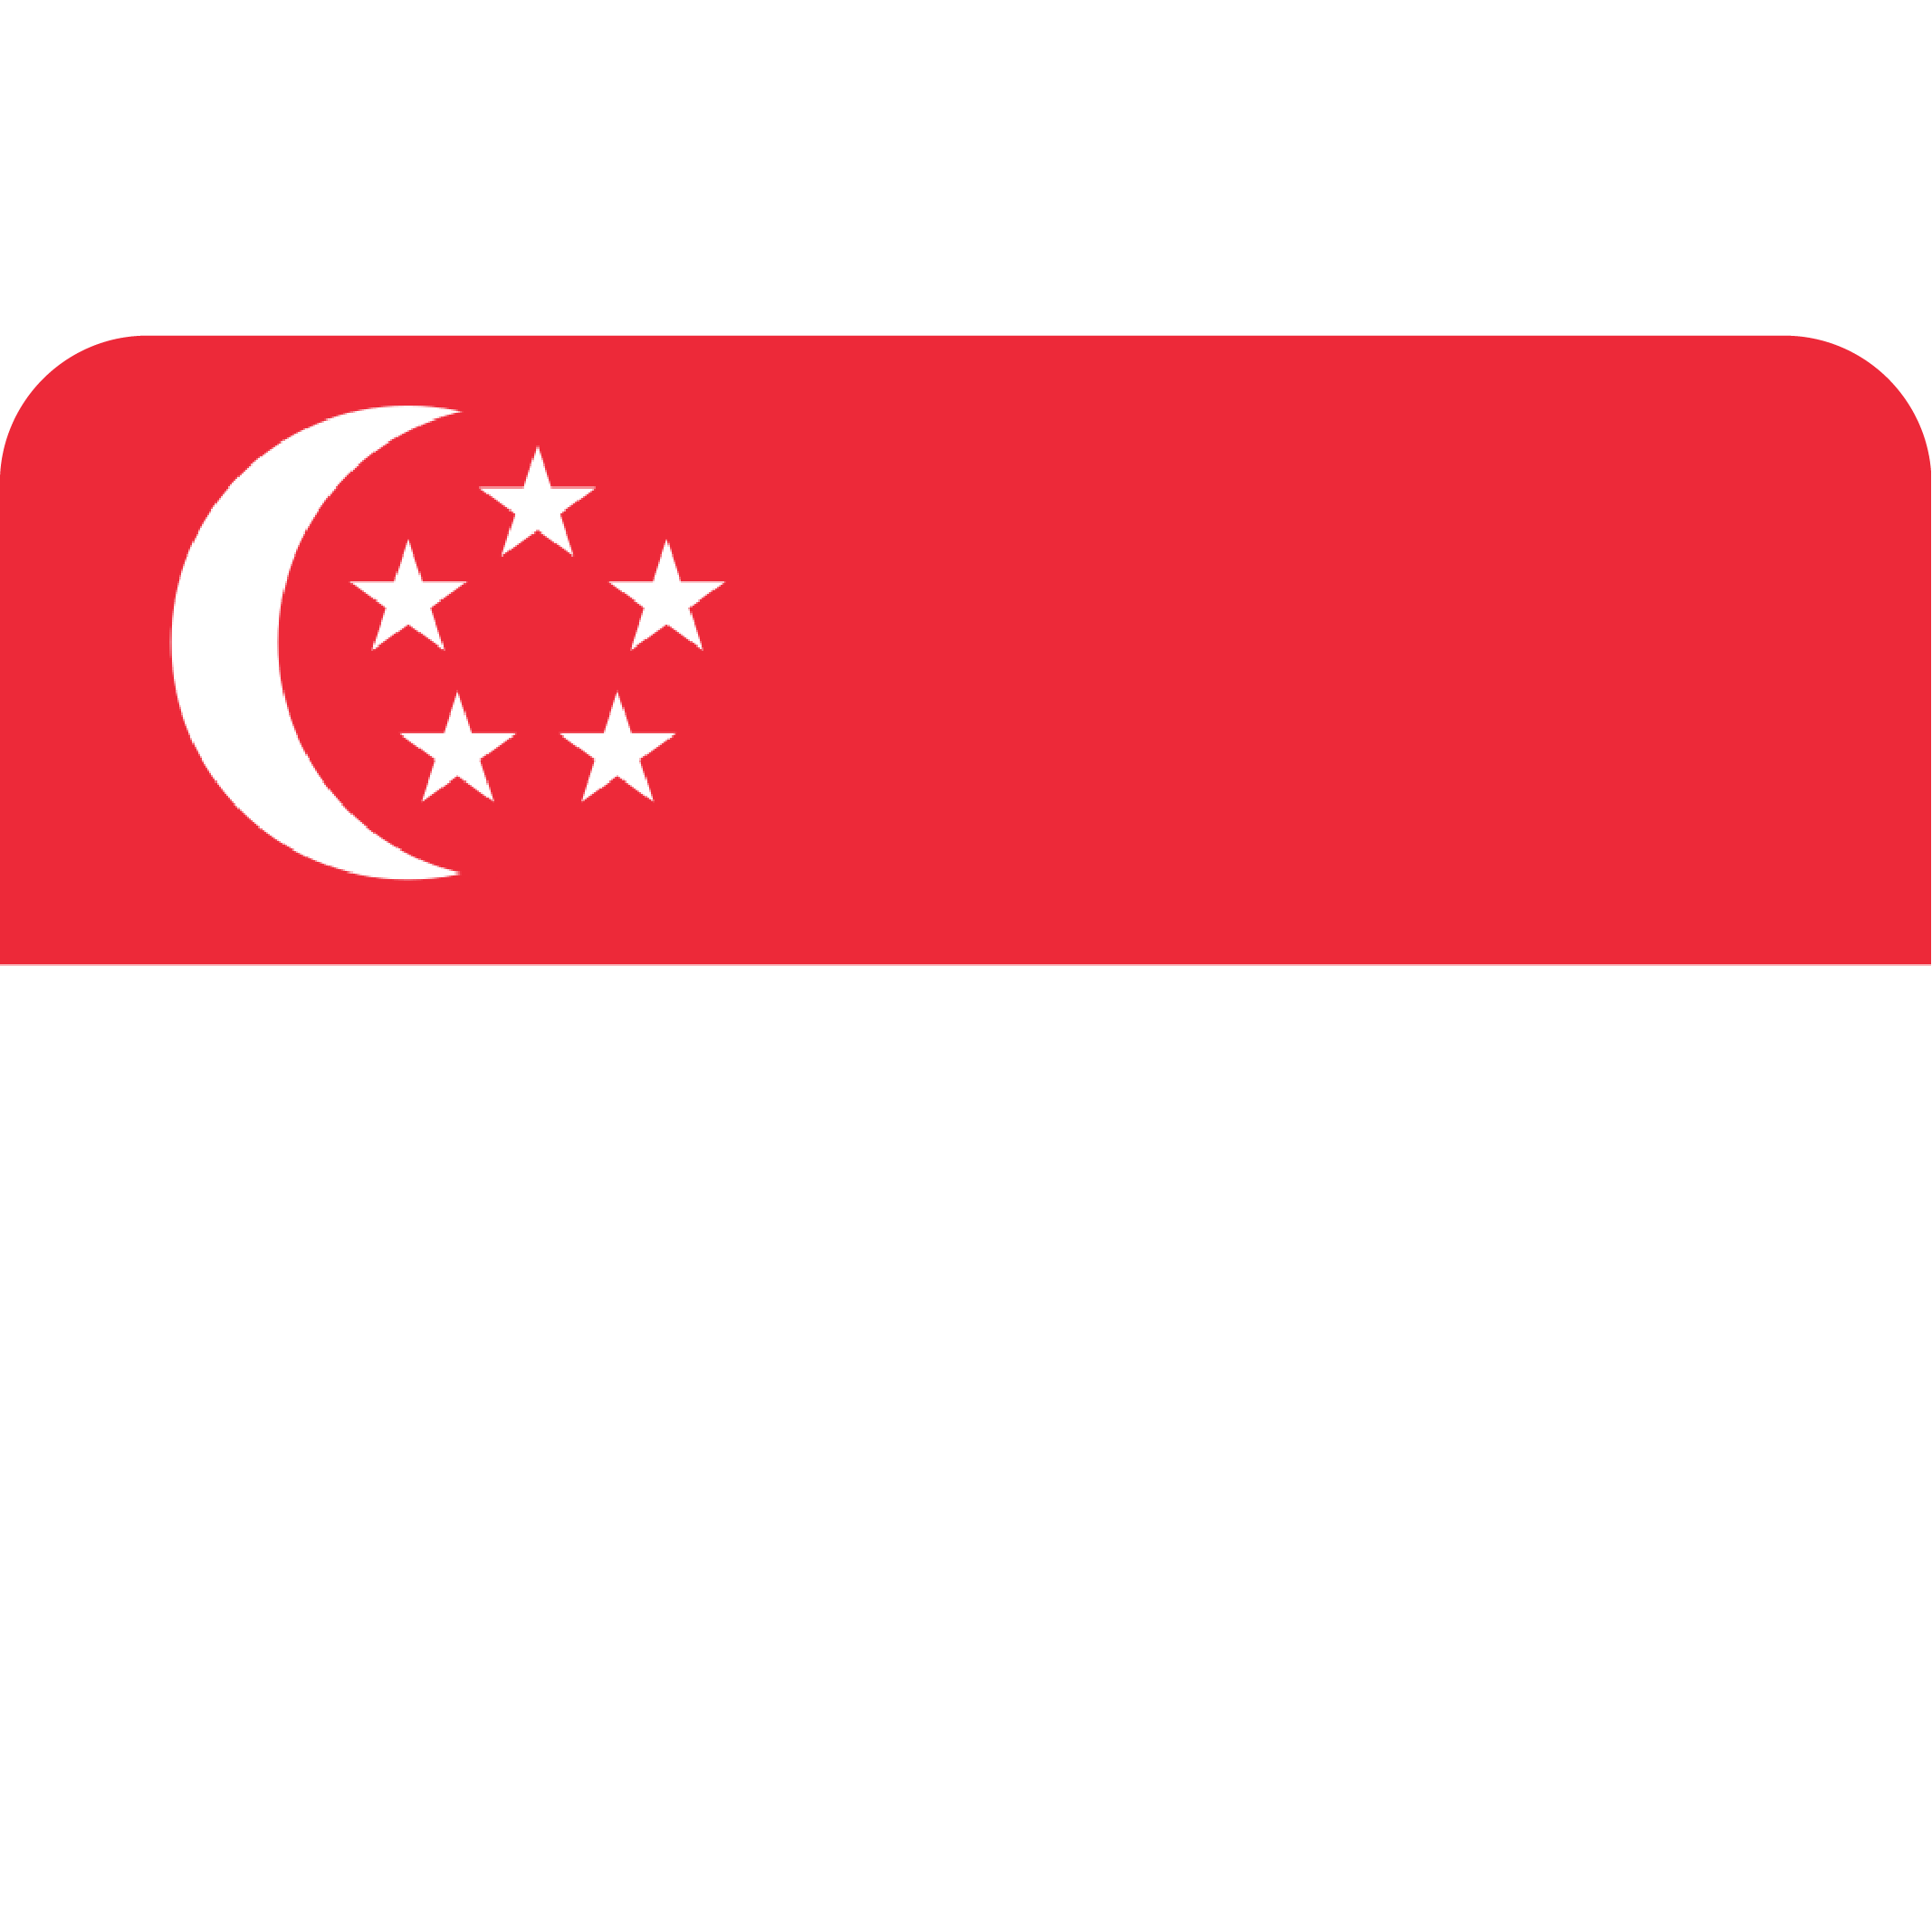 Singapore (S$)